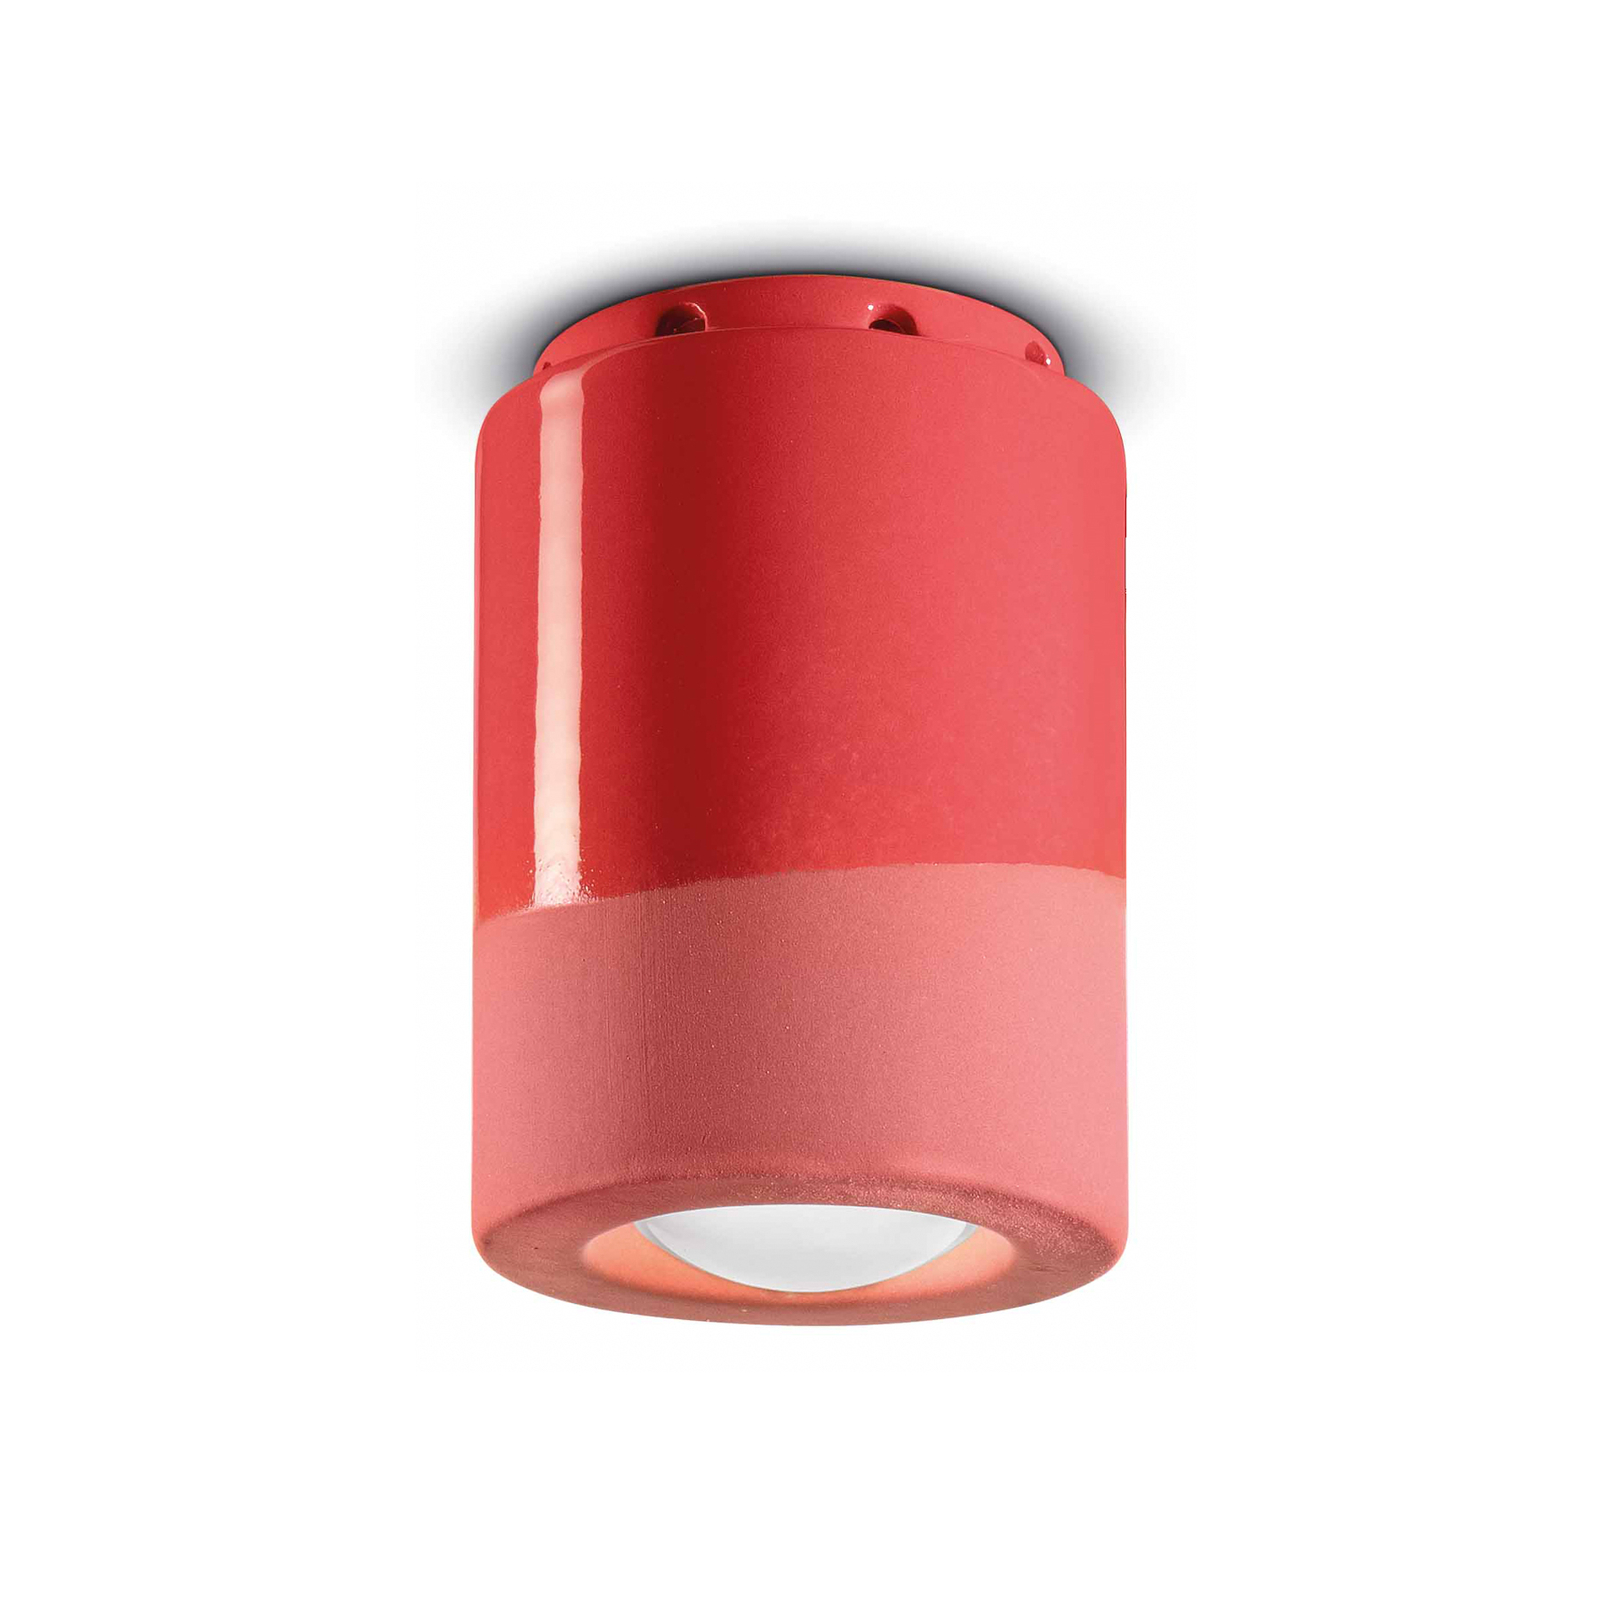 PI loftslampe, cylindrisk, Ø 8,5 cm, rød